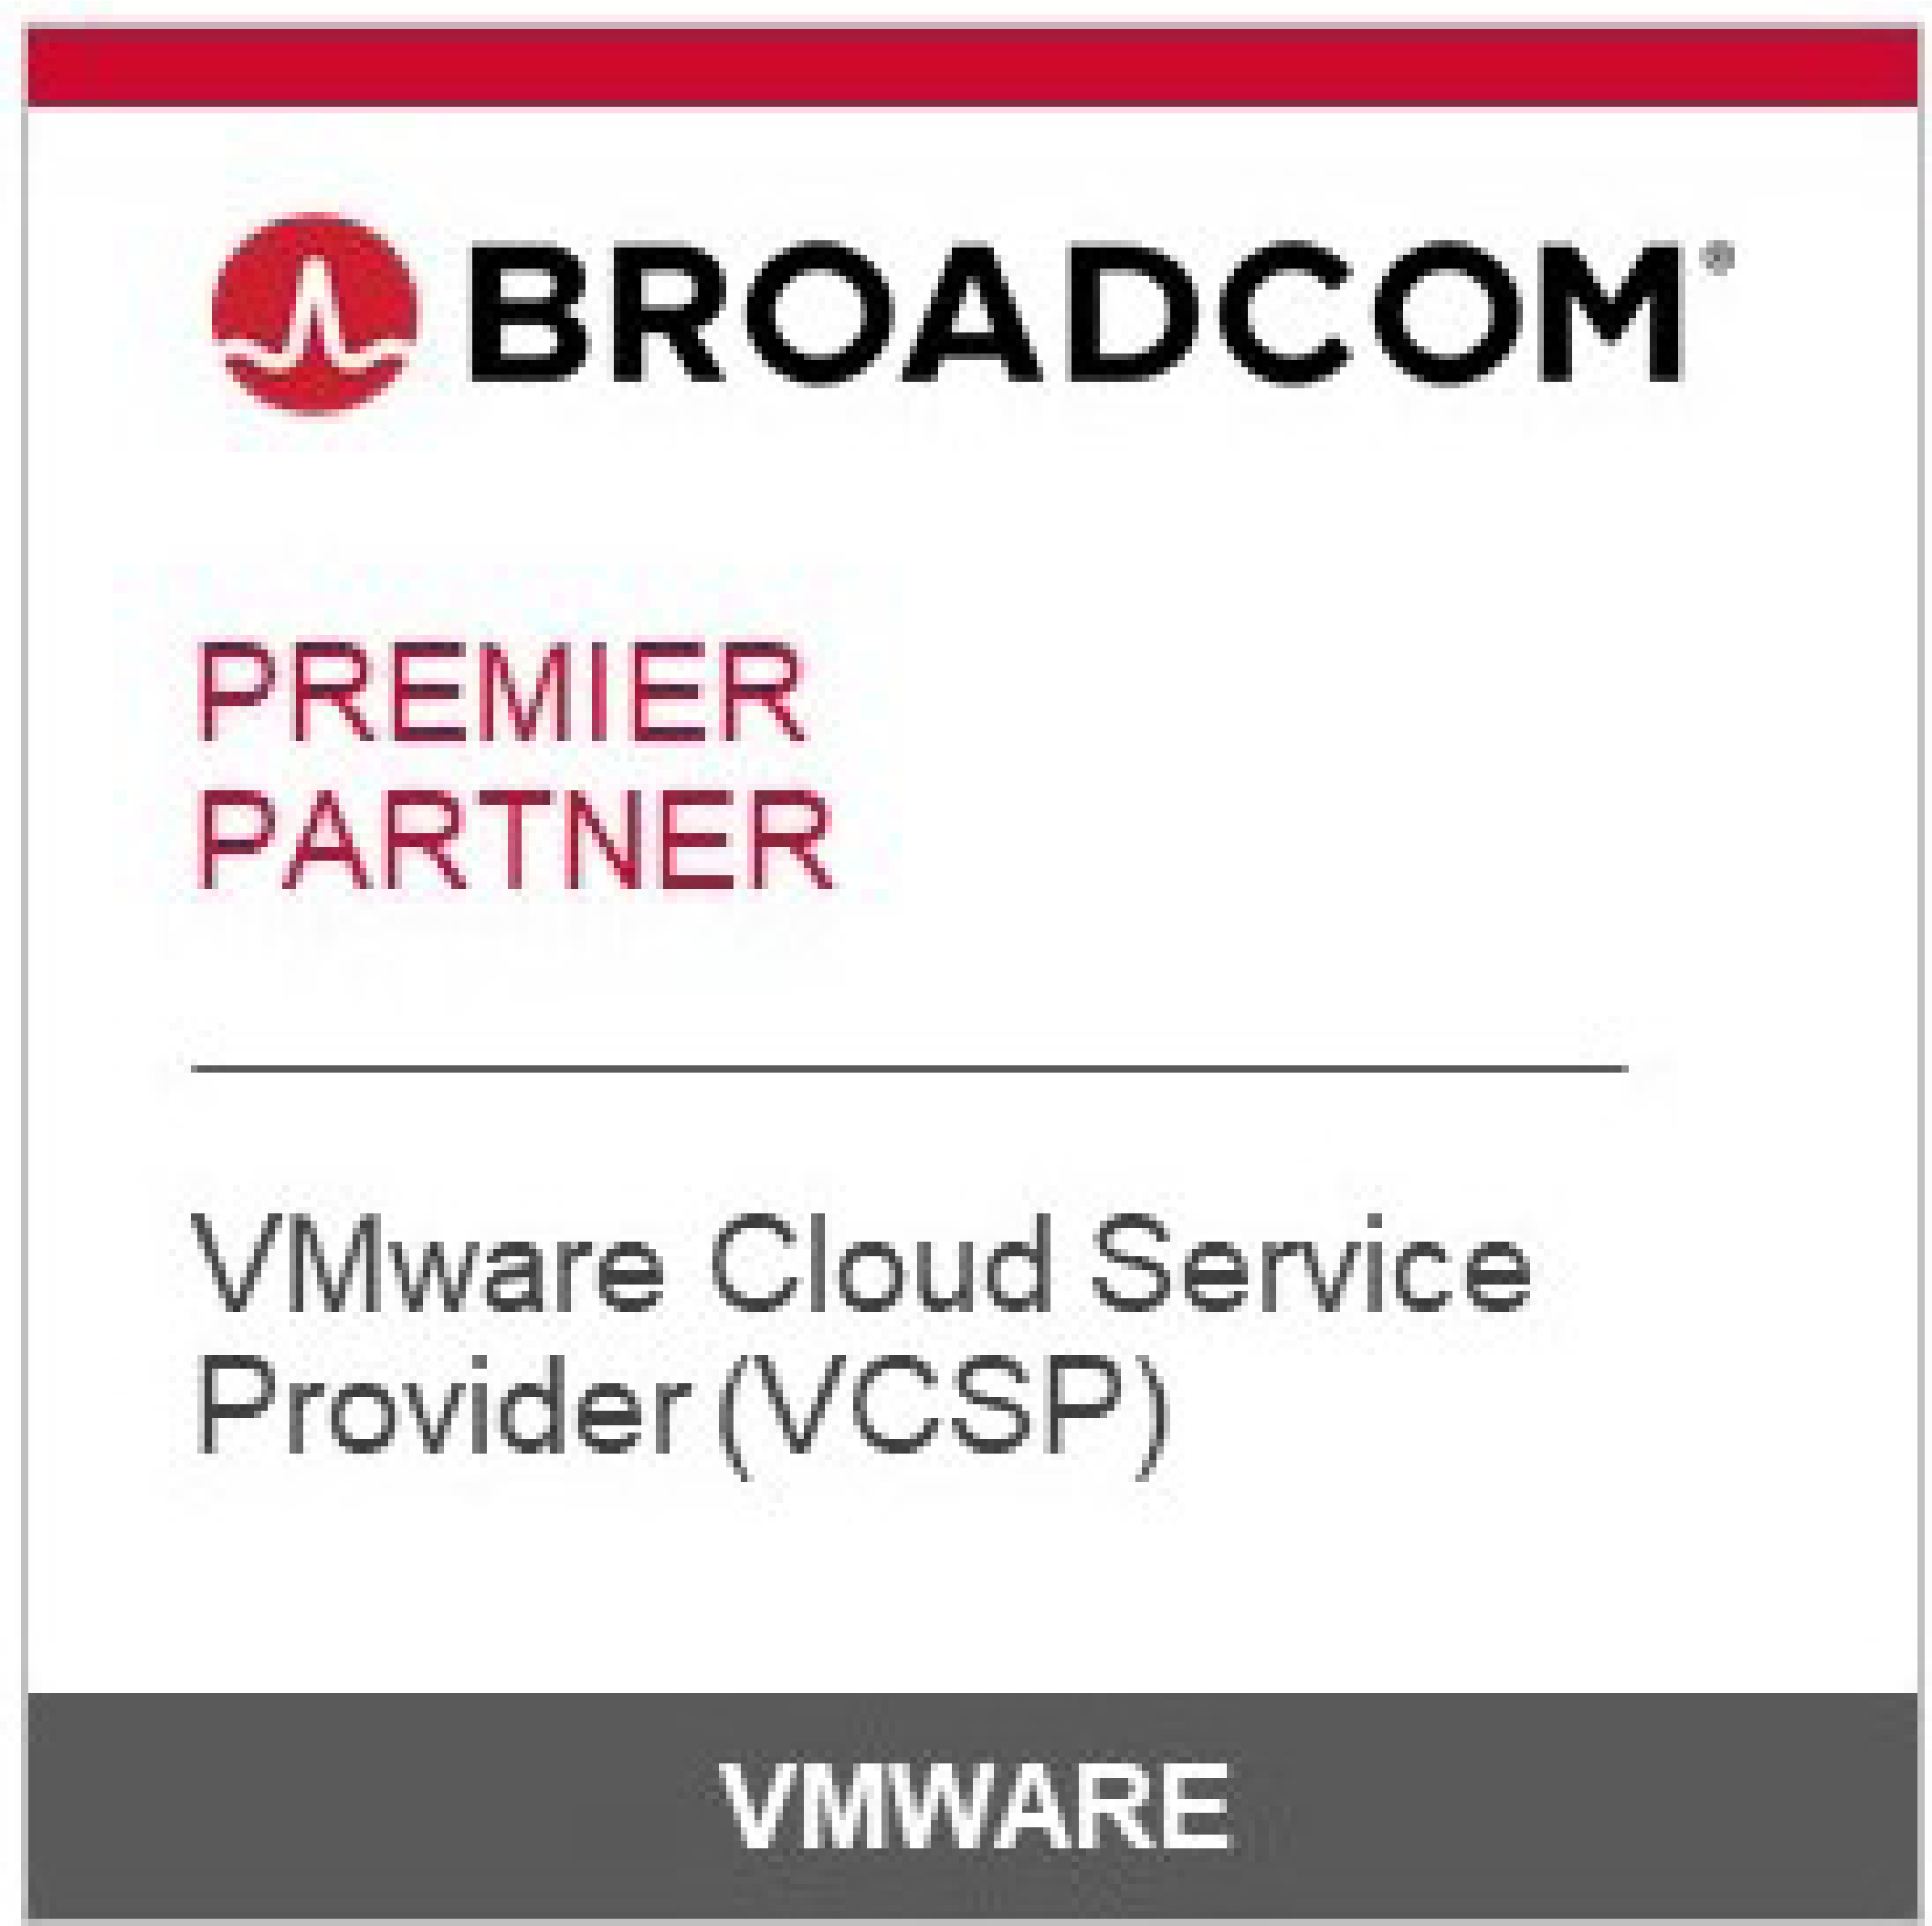 VMware by Broadcom Premier Partner - VMware Cloud Service Provider